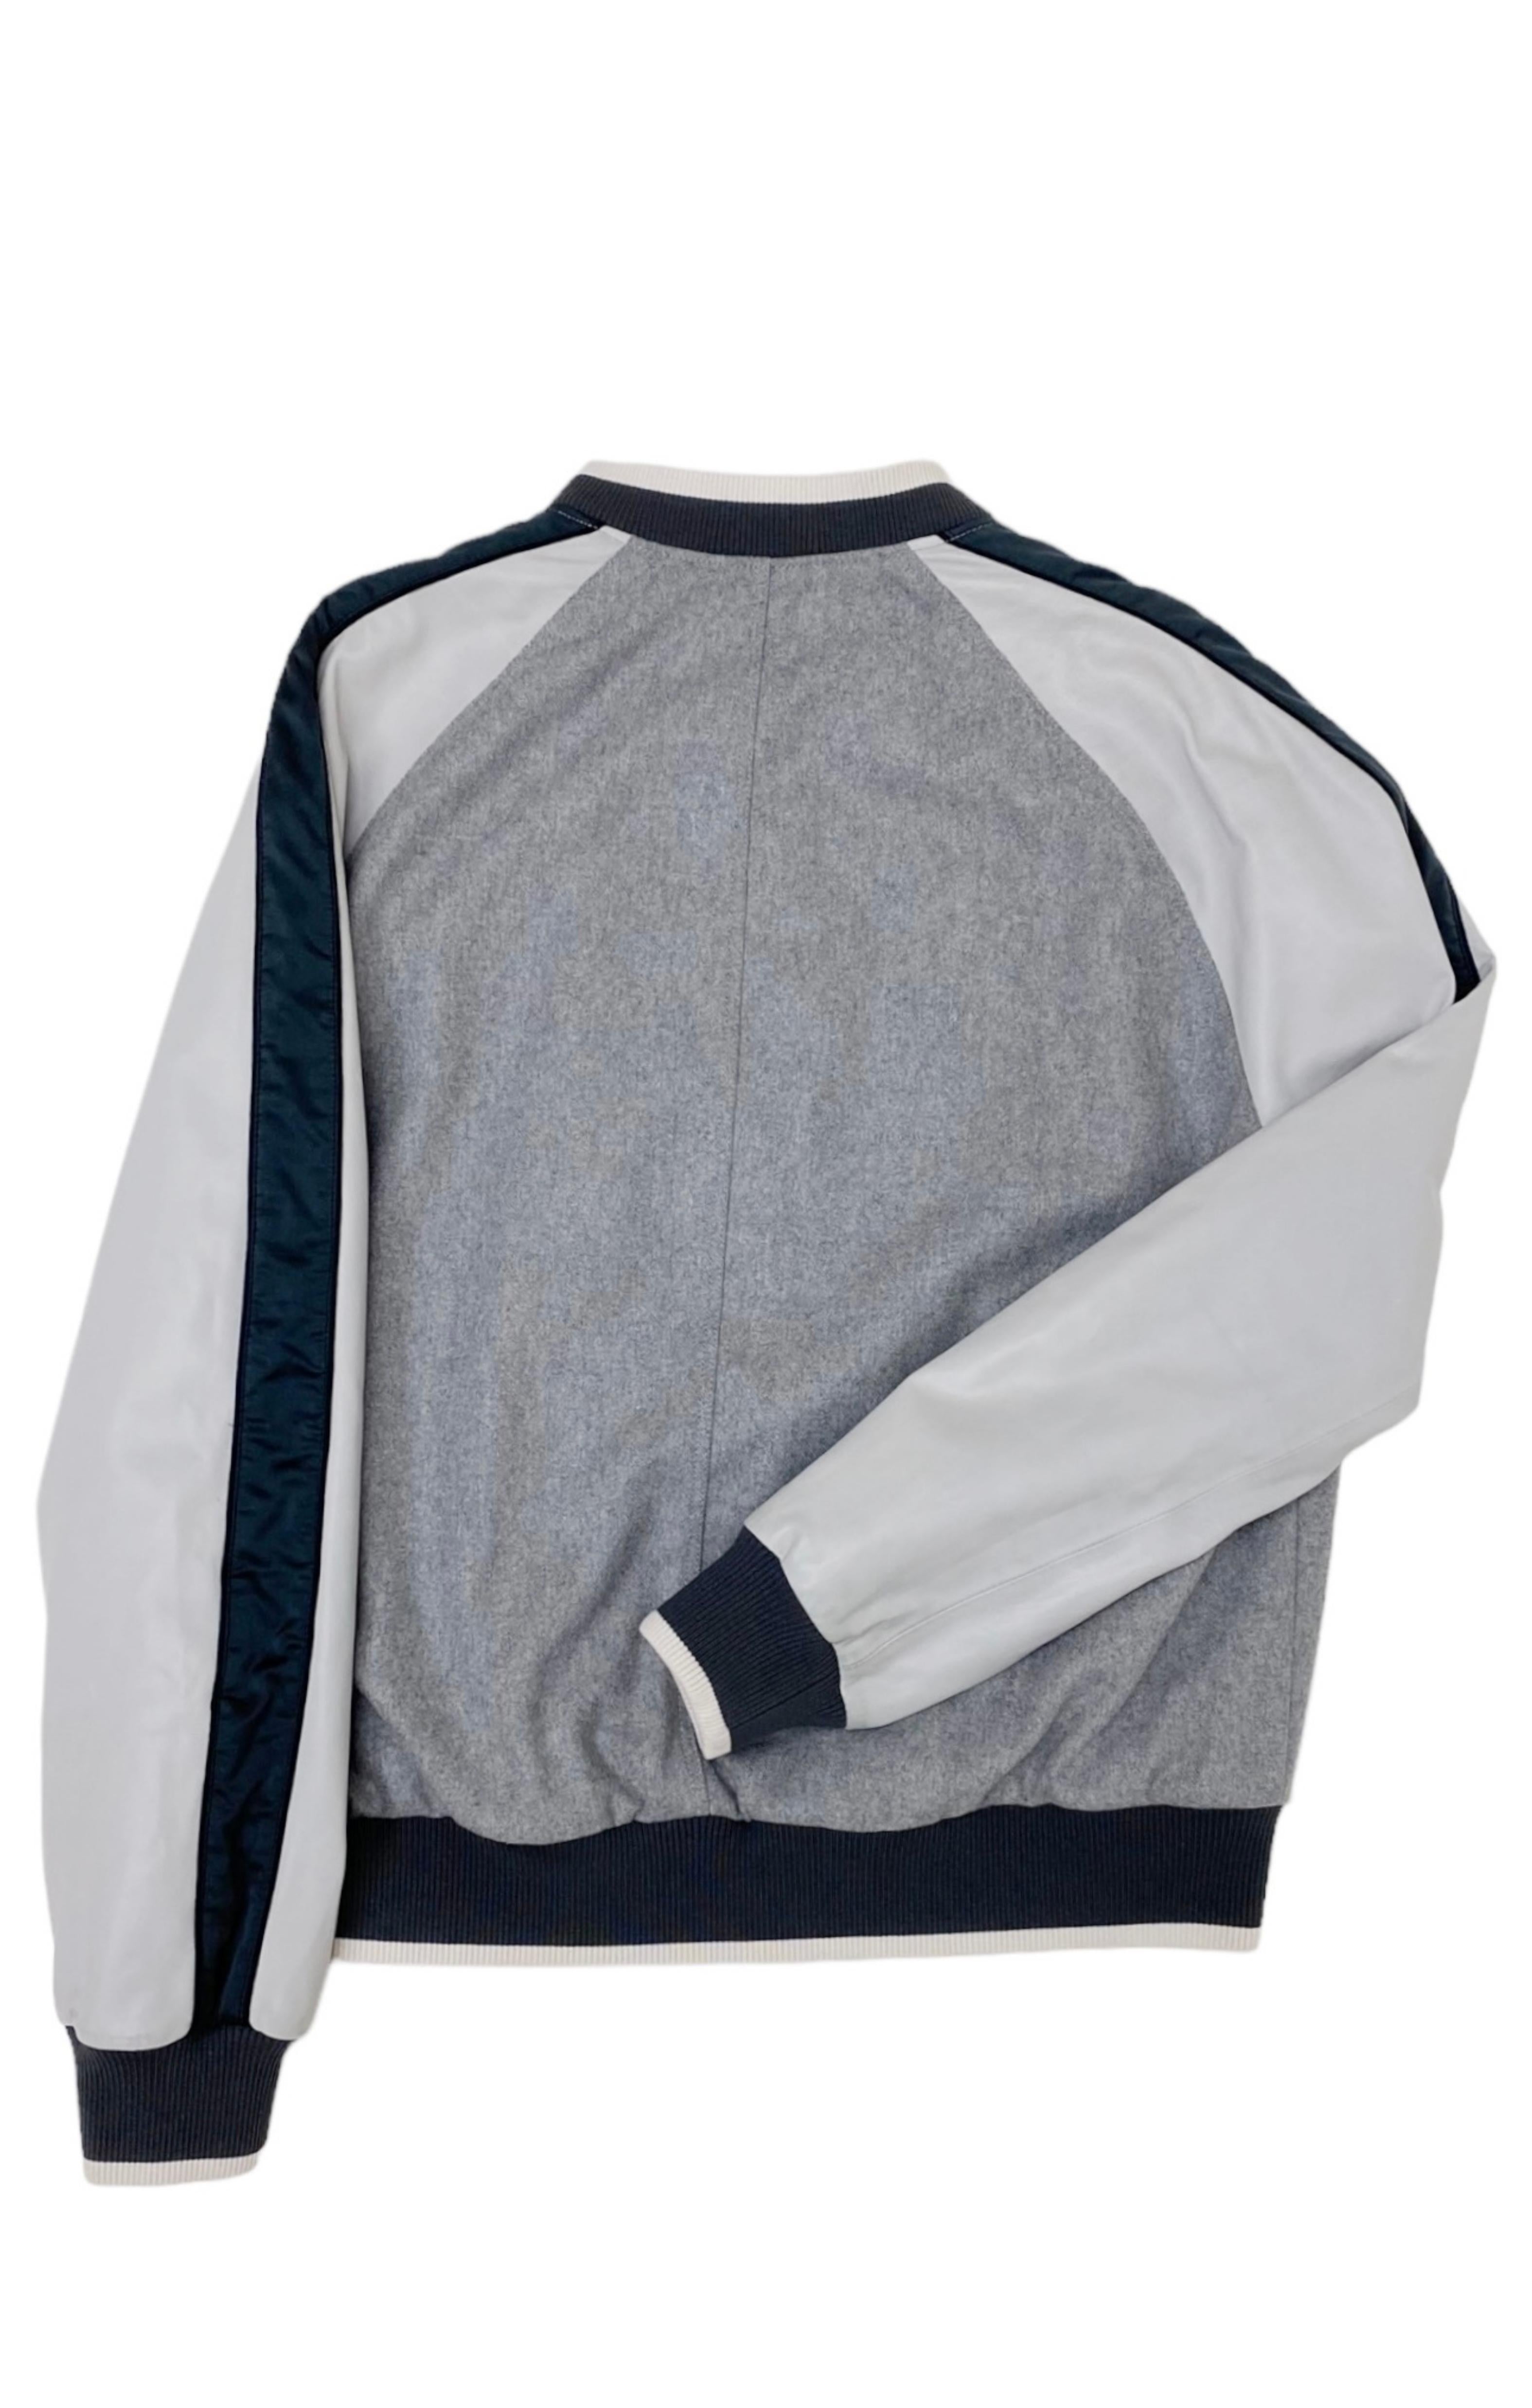 LANVIN (RARE) Jacket Size: No size tags, fits like XL